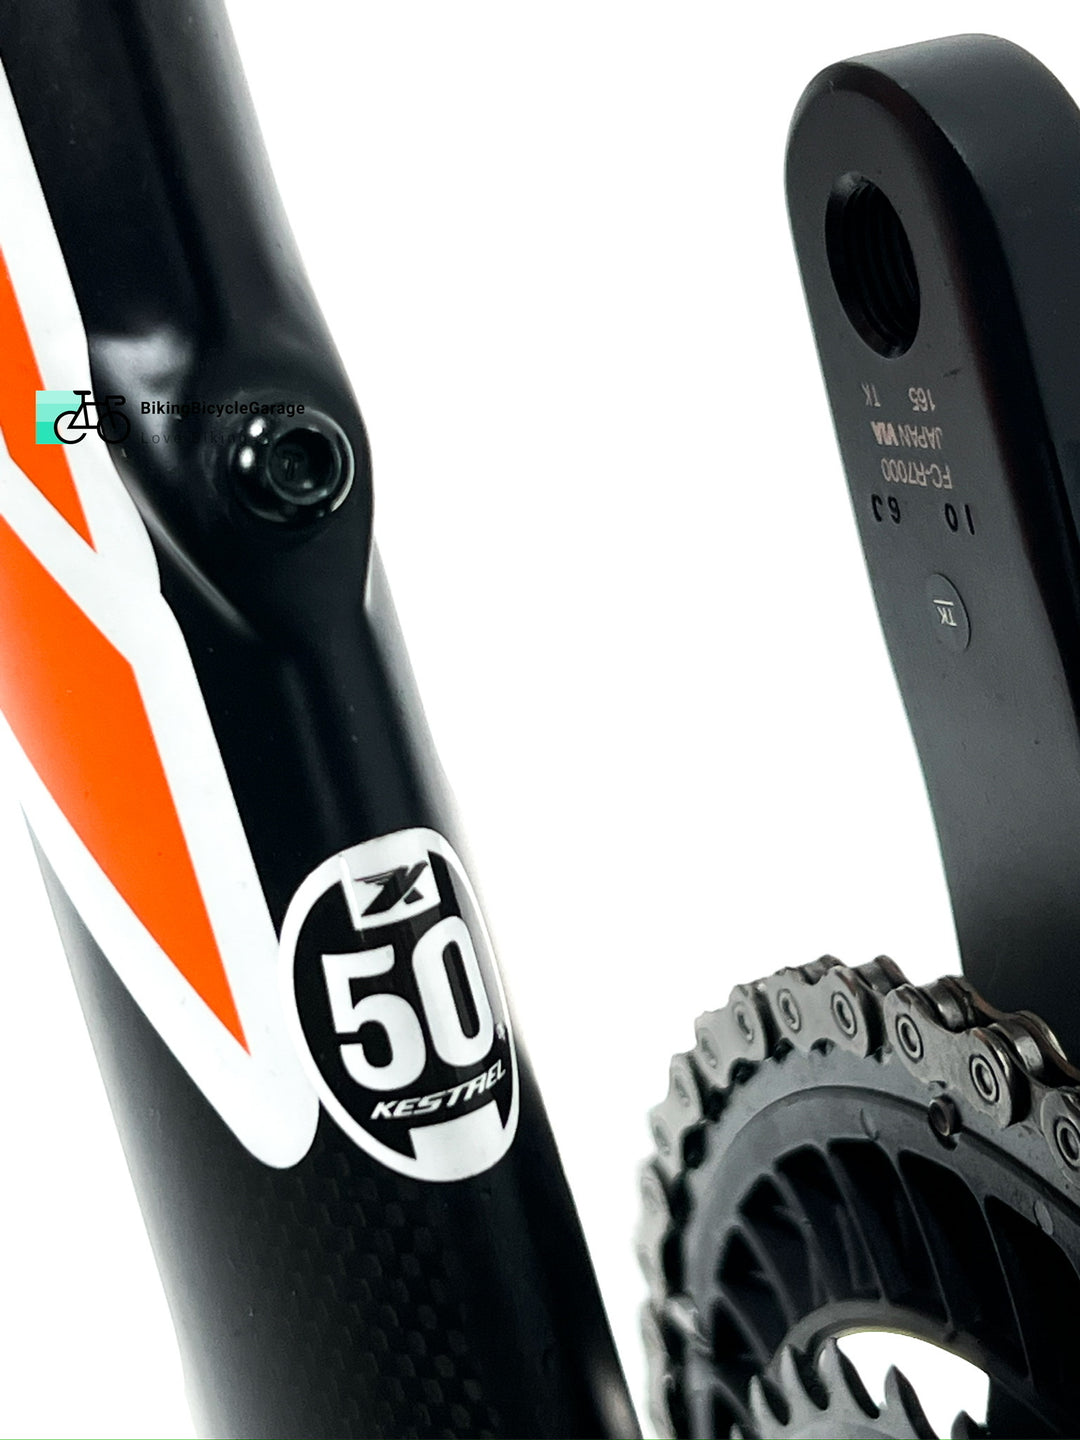 Kestrel 4000 LTD, Di2 Ultegra, Carbon Fiber Road Bike-2012 50cm, MSRP:$8K